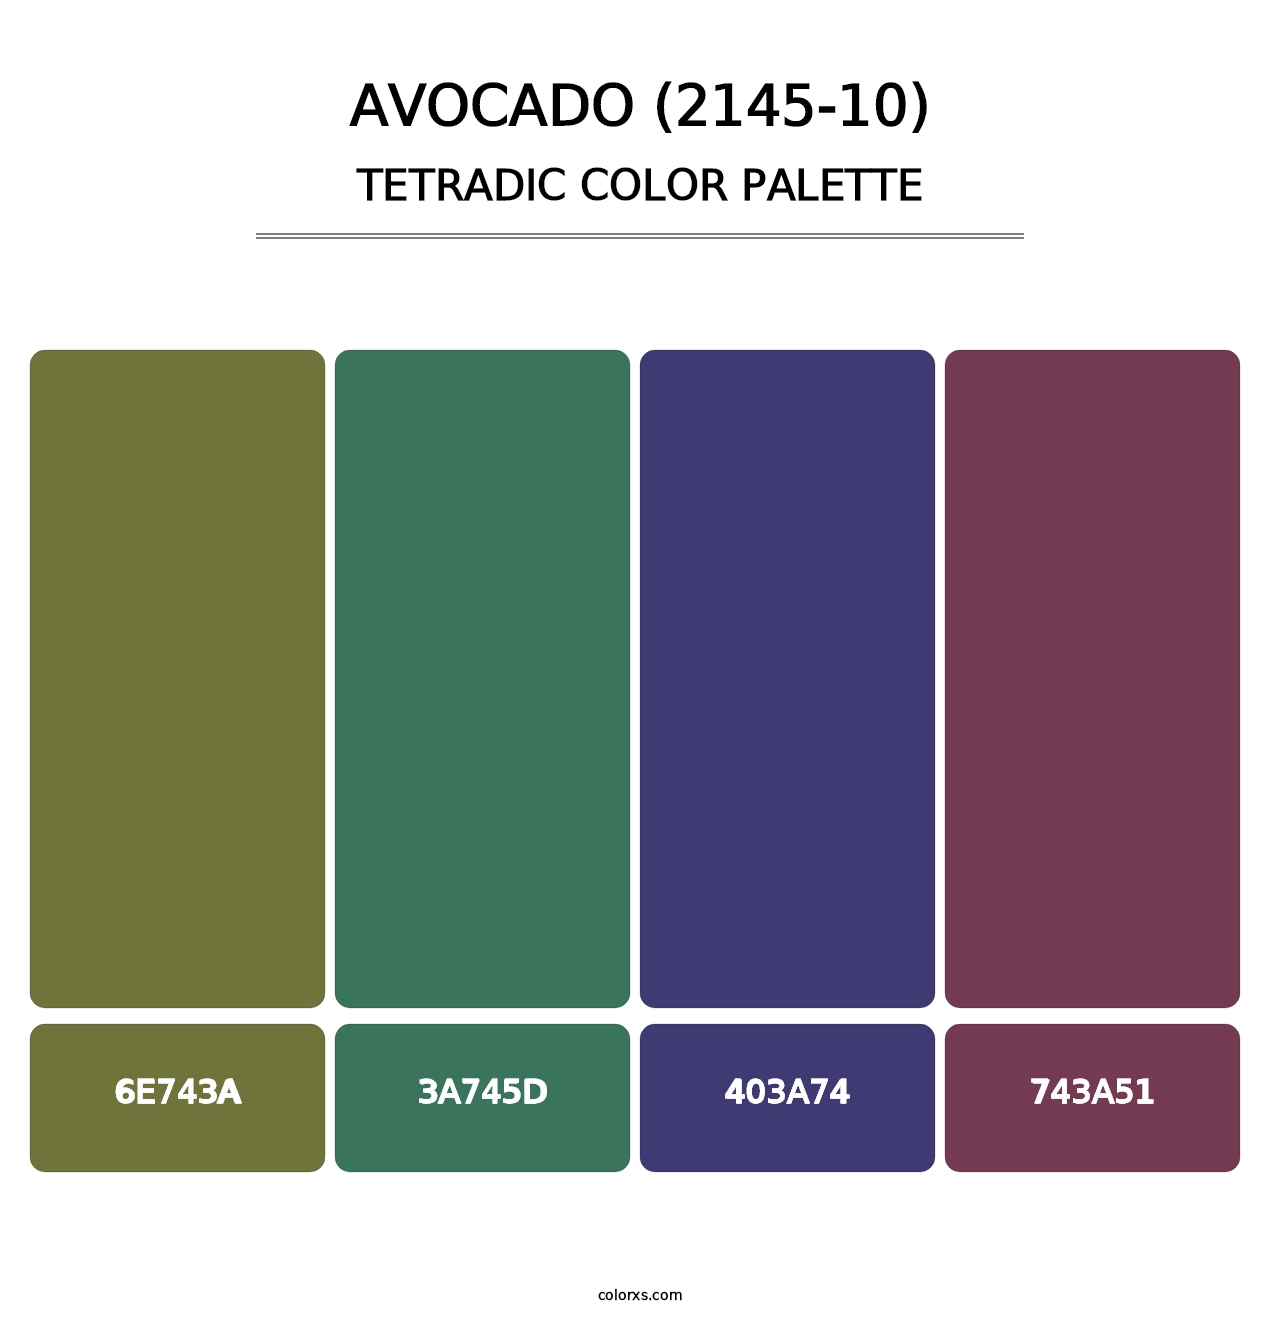 Avocado (2145-10) - Tetradic Color Palette